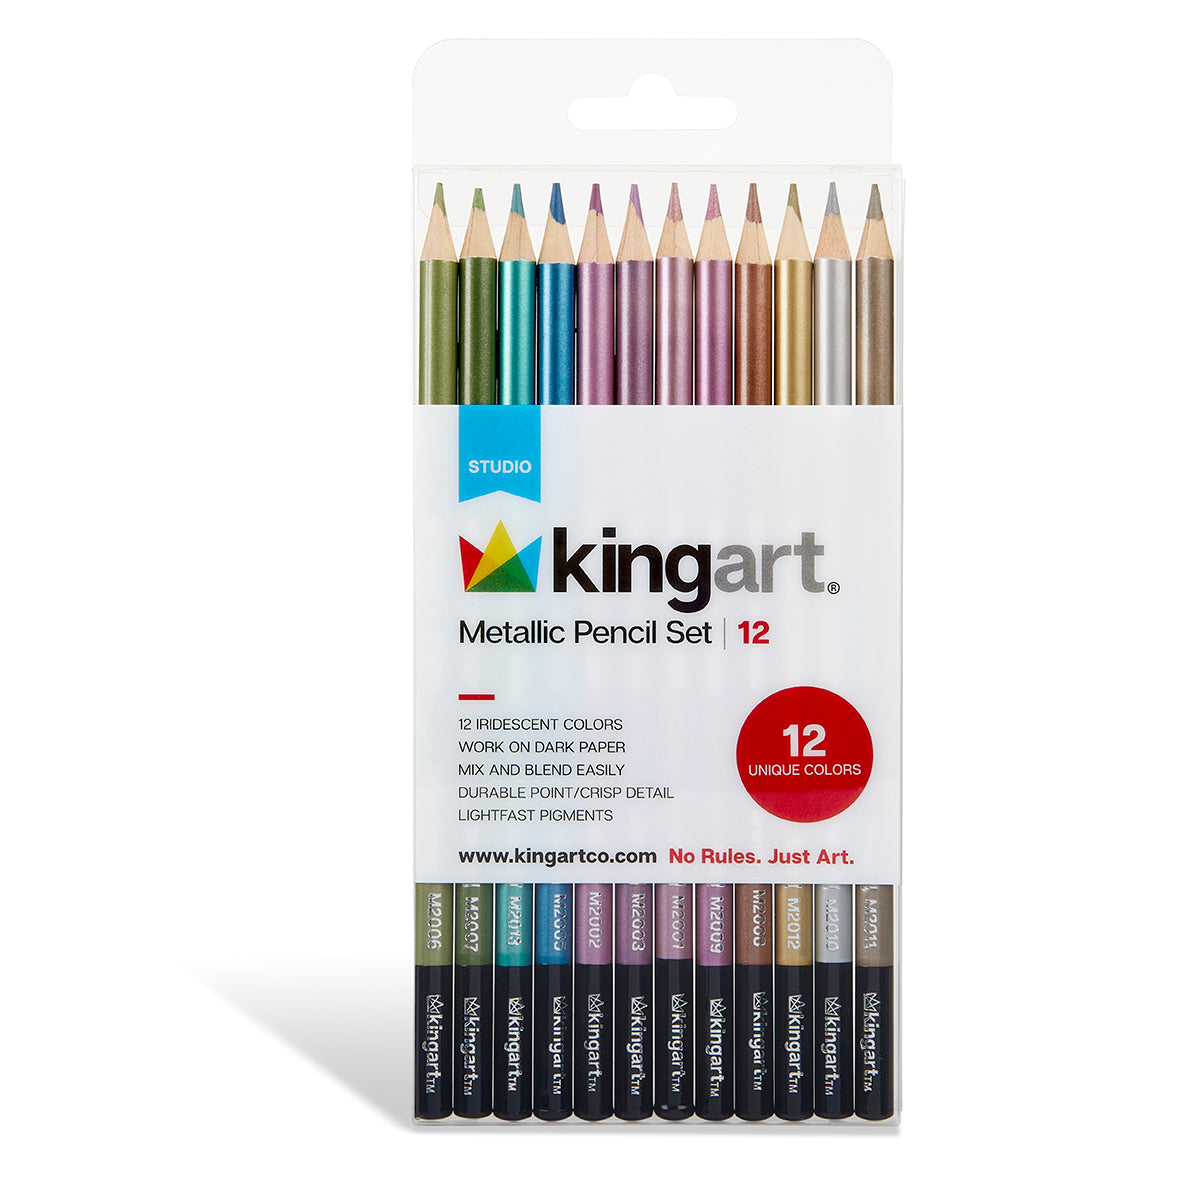 Glokers 72-Piece Art Supplies & Drawing Kit Set Art Pencils, Graphite, Metallic